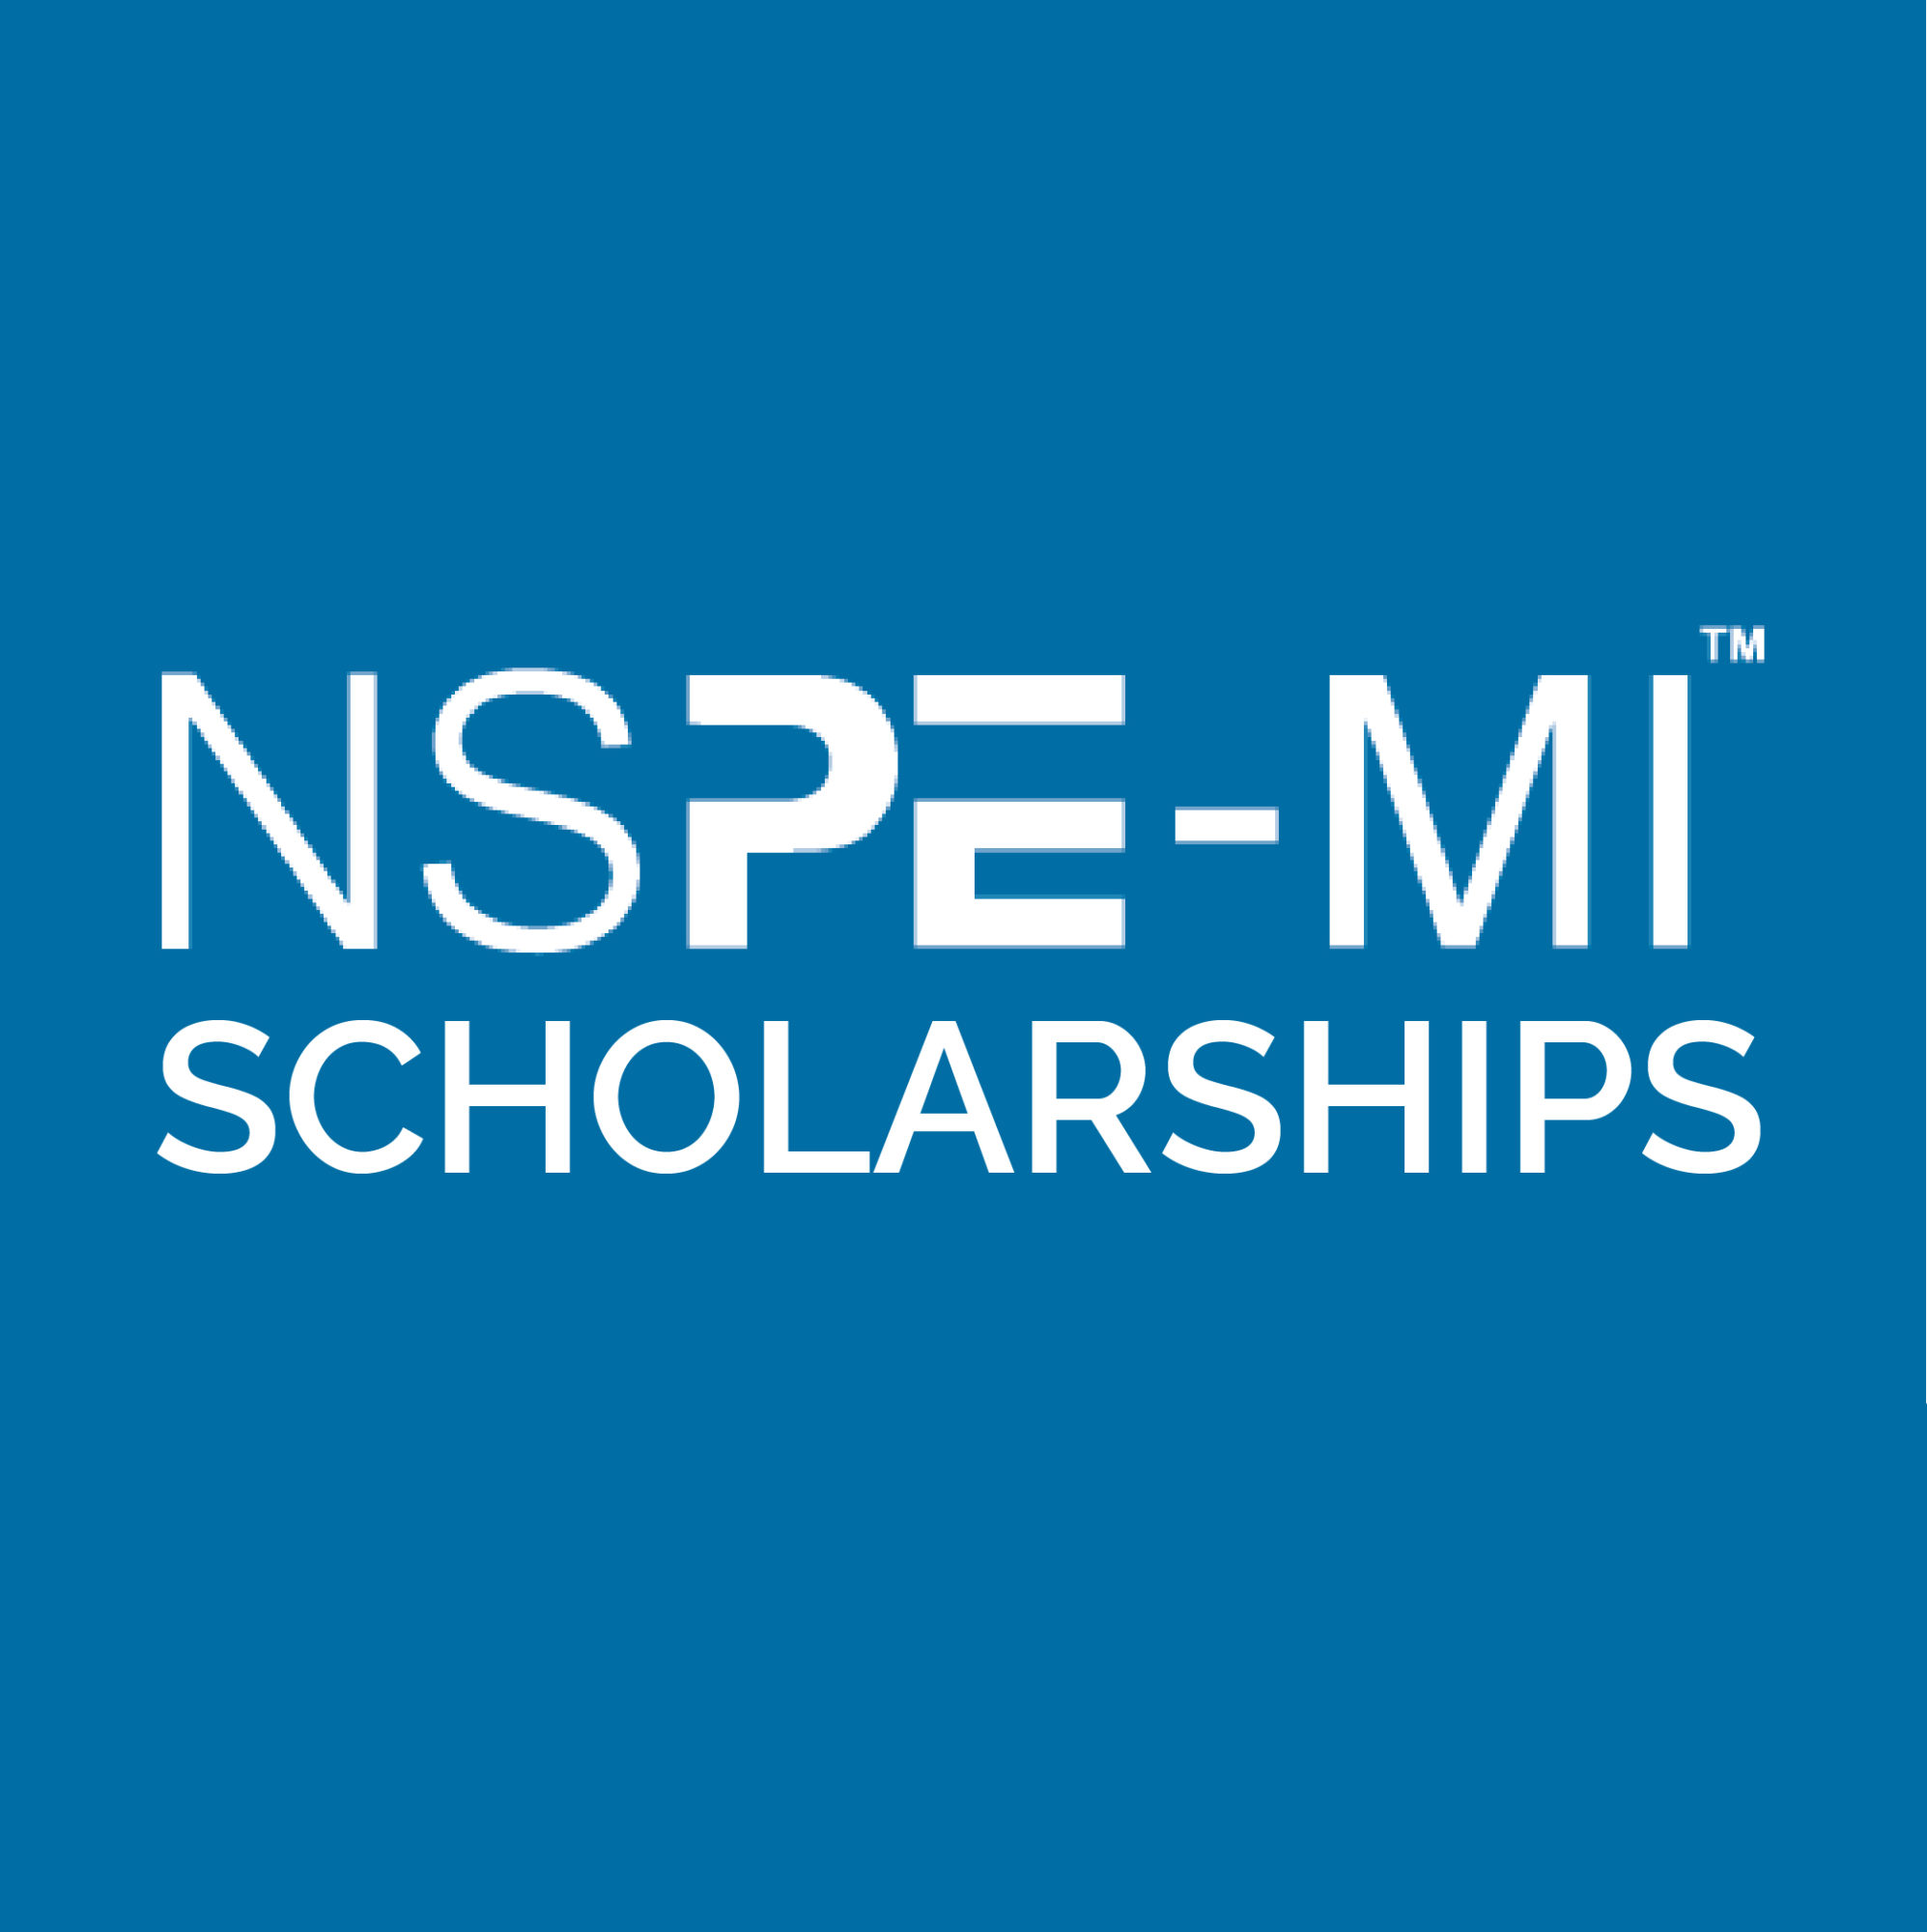 nspe mi state logo scholarships 01